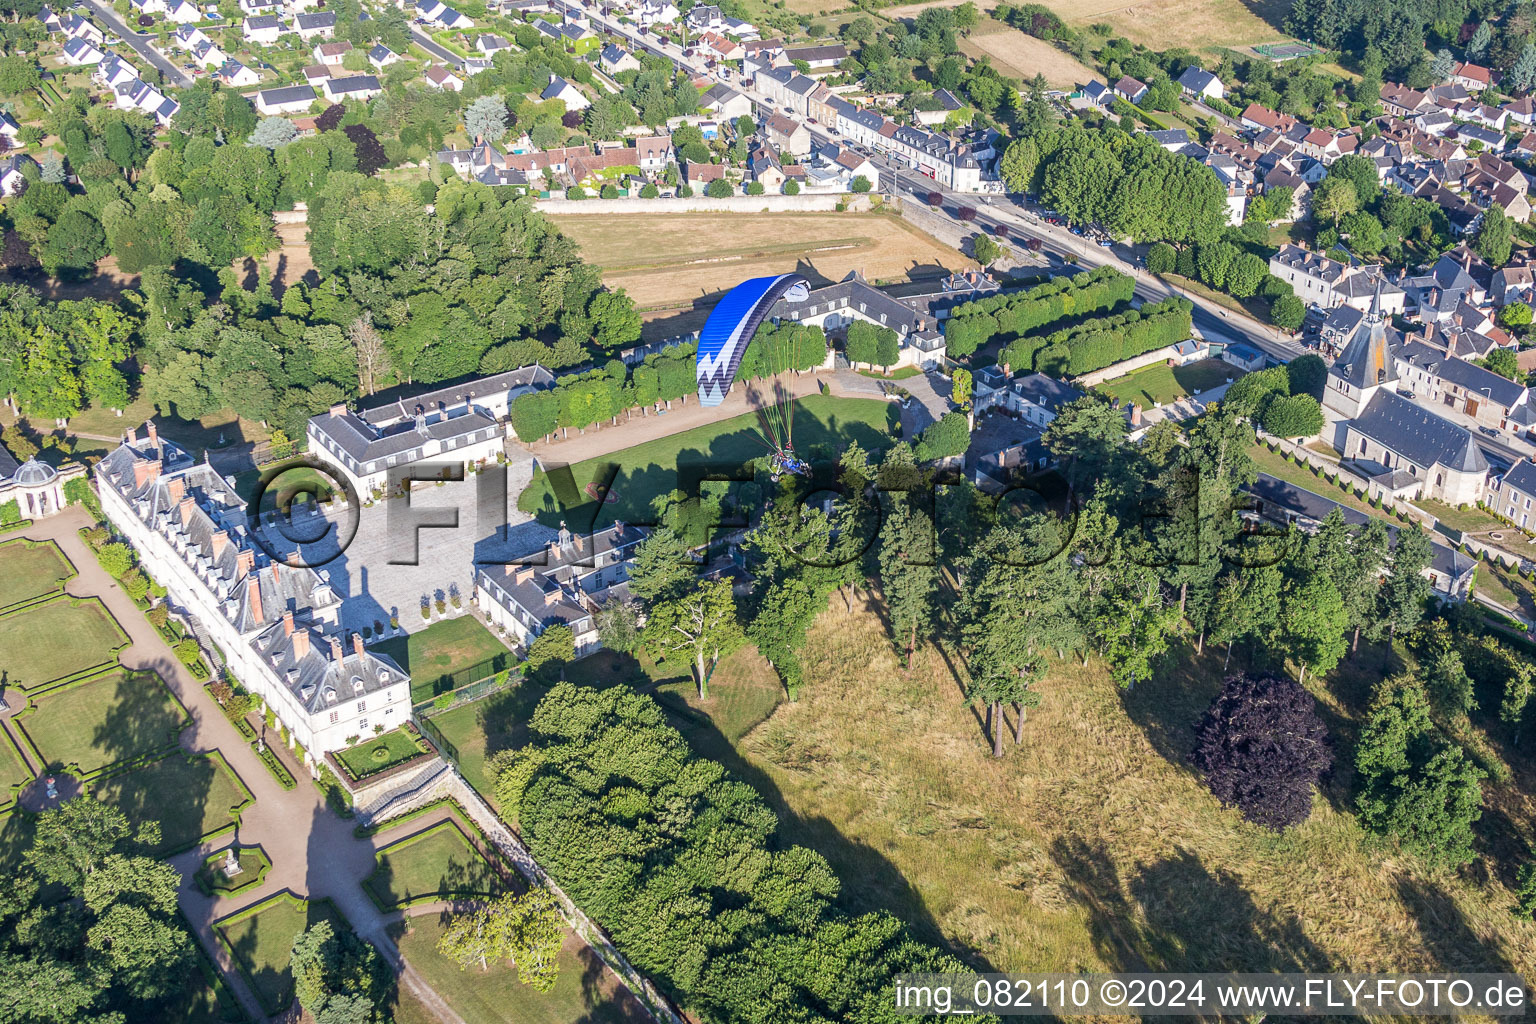 Aerial view of Building complex in the park of the castle Chateau de Menars on the Loire river in Menars in Centre-Val de Loire, France